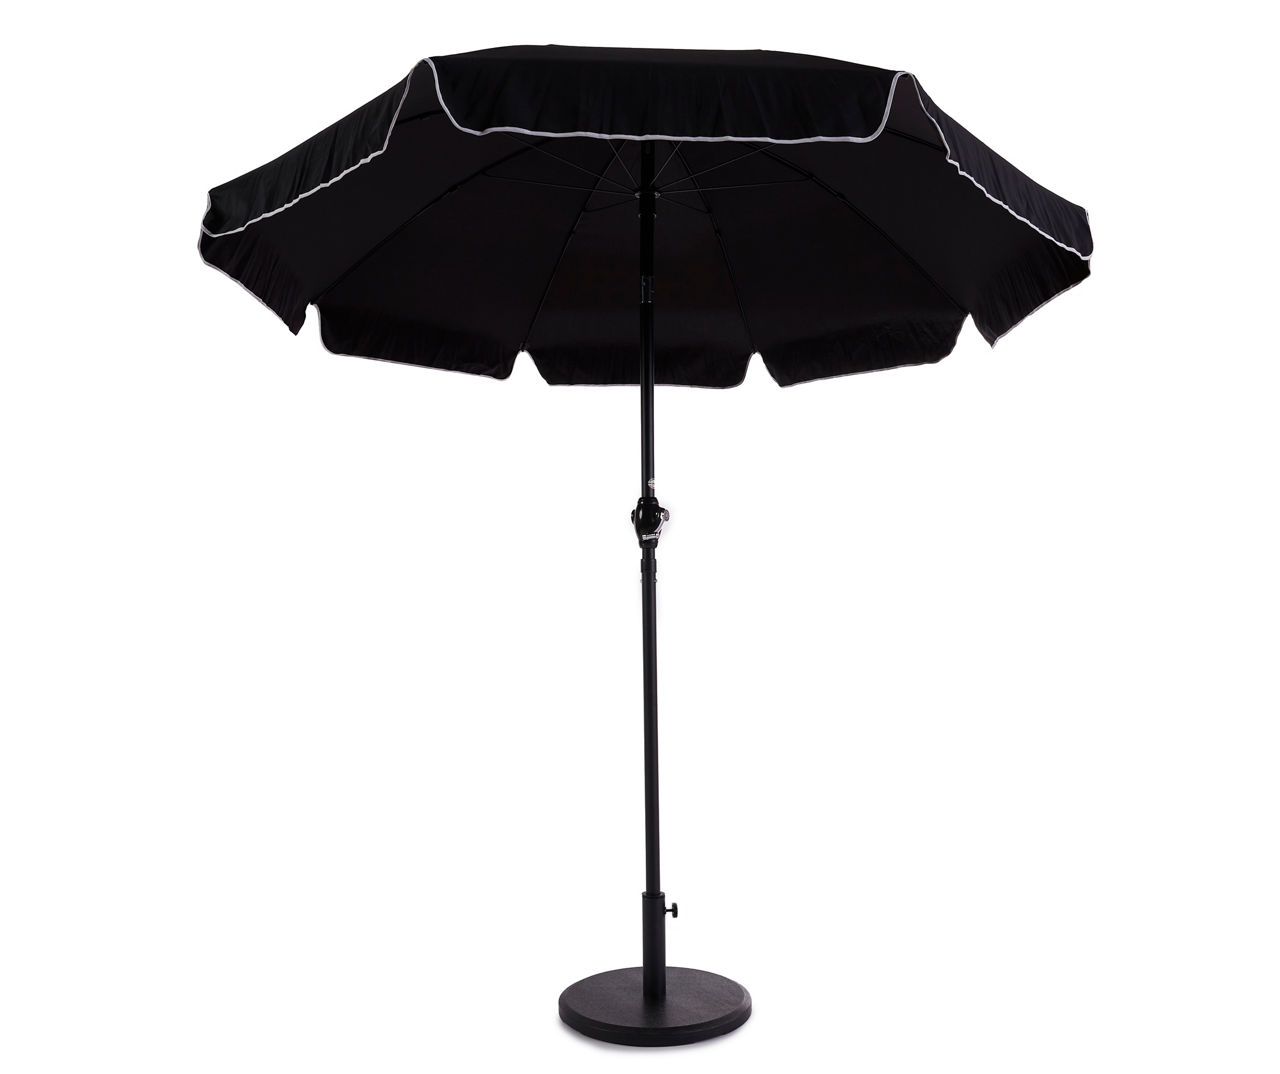 Wilson & Fisher 7.5' Black Round Tilt Cafe Patio Umbrella | Big Lots